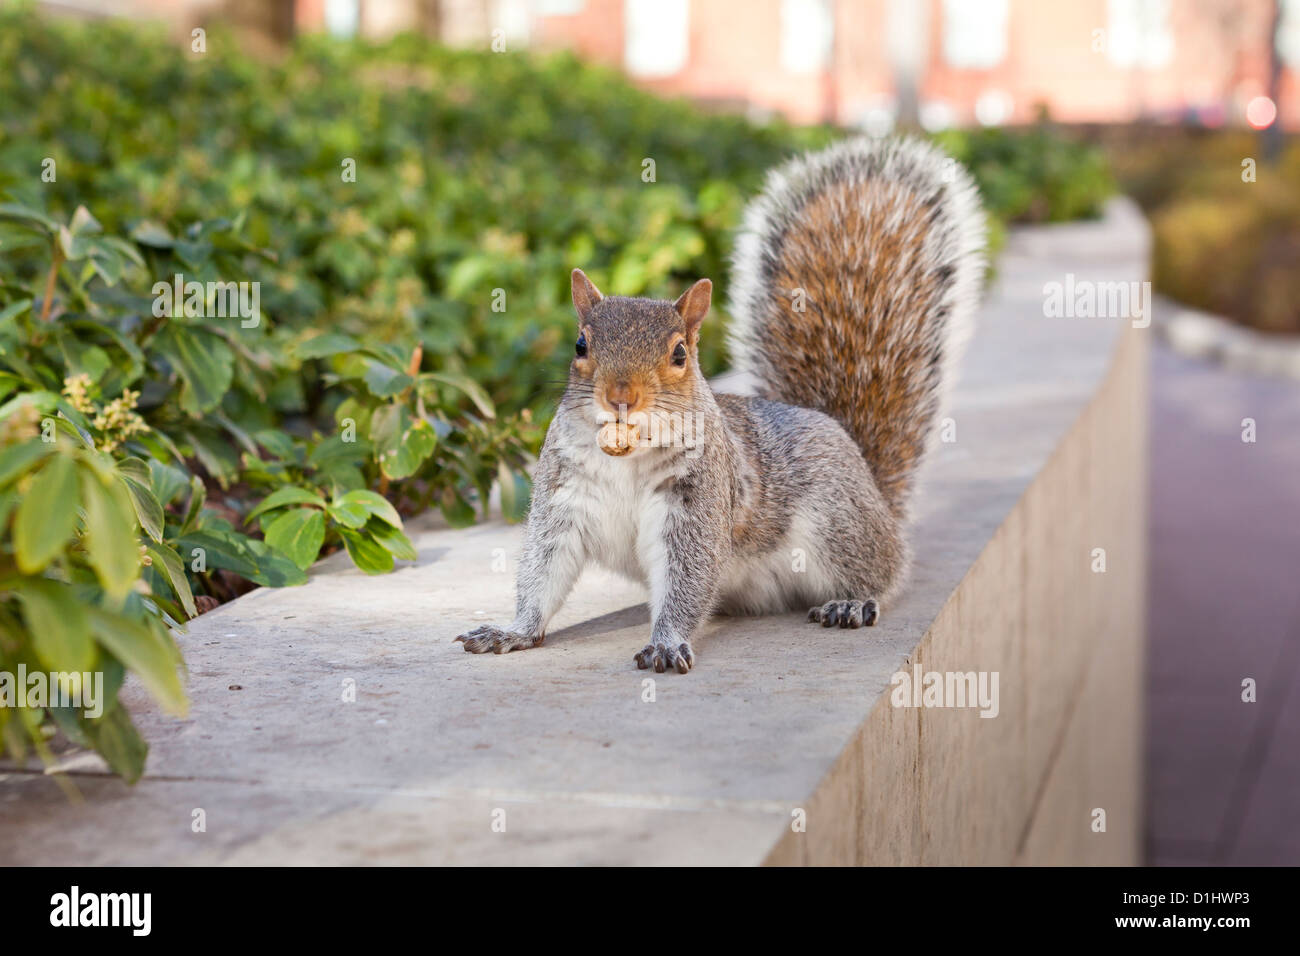 American red squirrel (Tamiasciurus hudsonicus) with peanut in mouth - USA Stock Photo